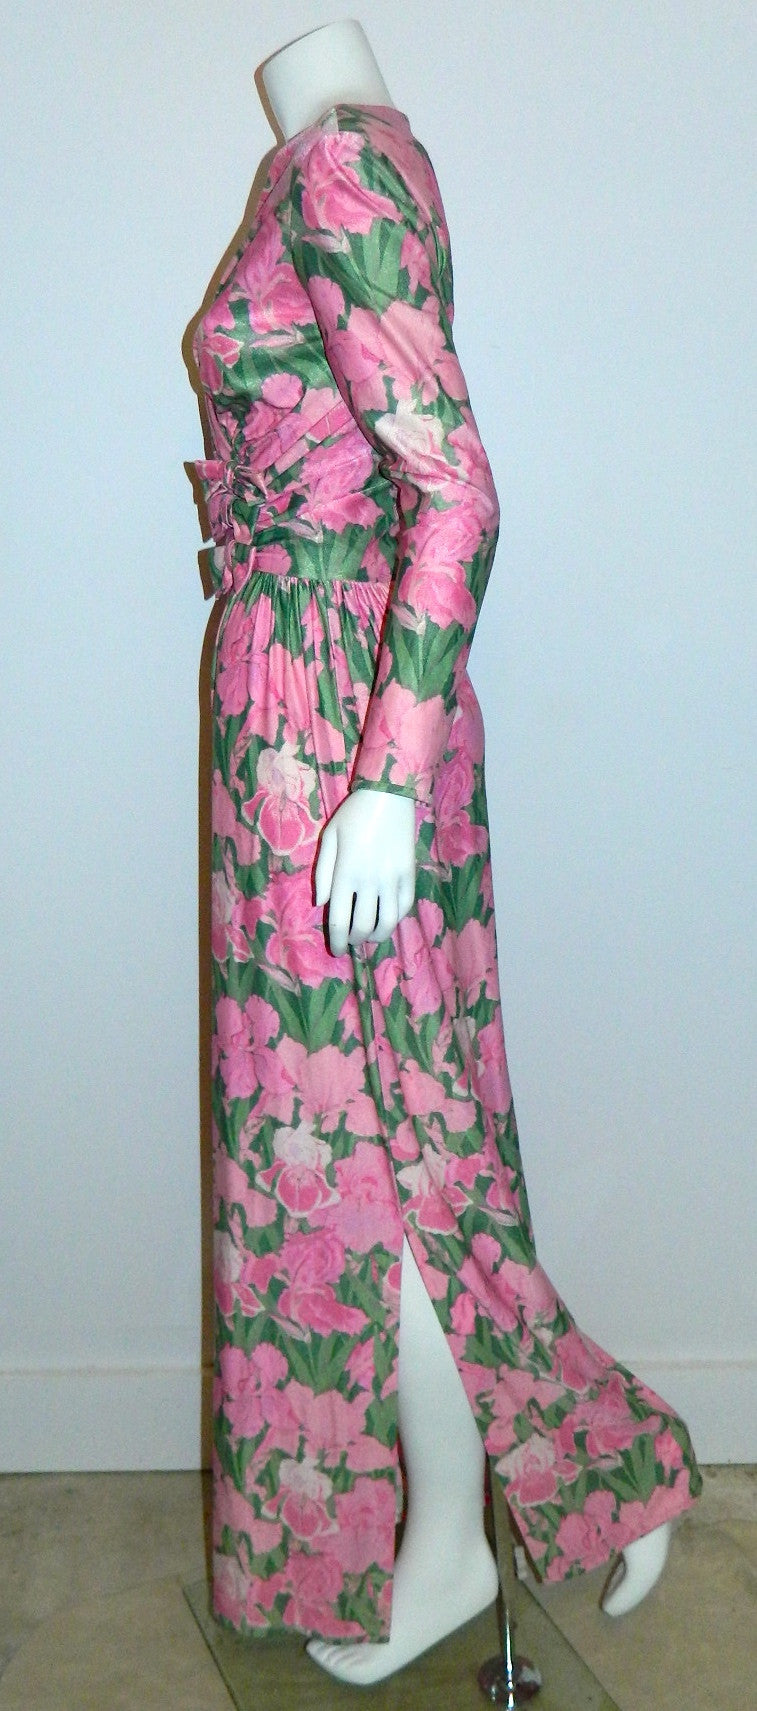 vintage 1970s Iris print dress Robert- David Morton maxi gown S